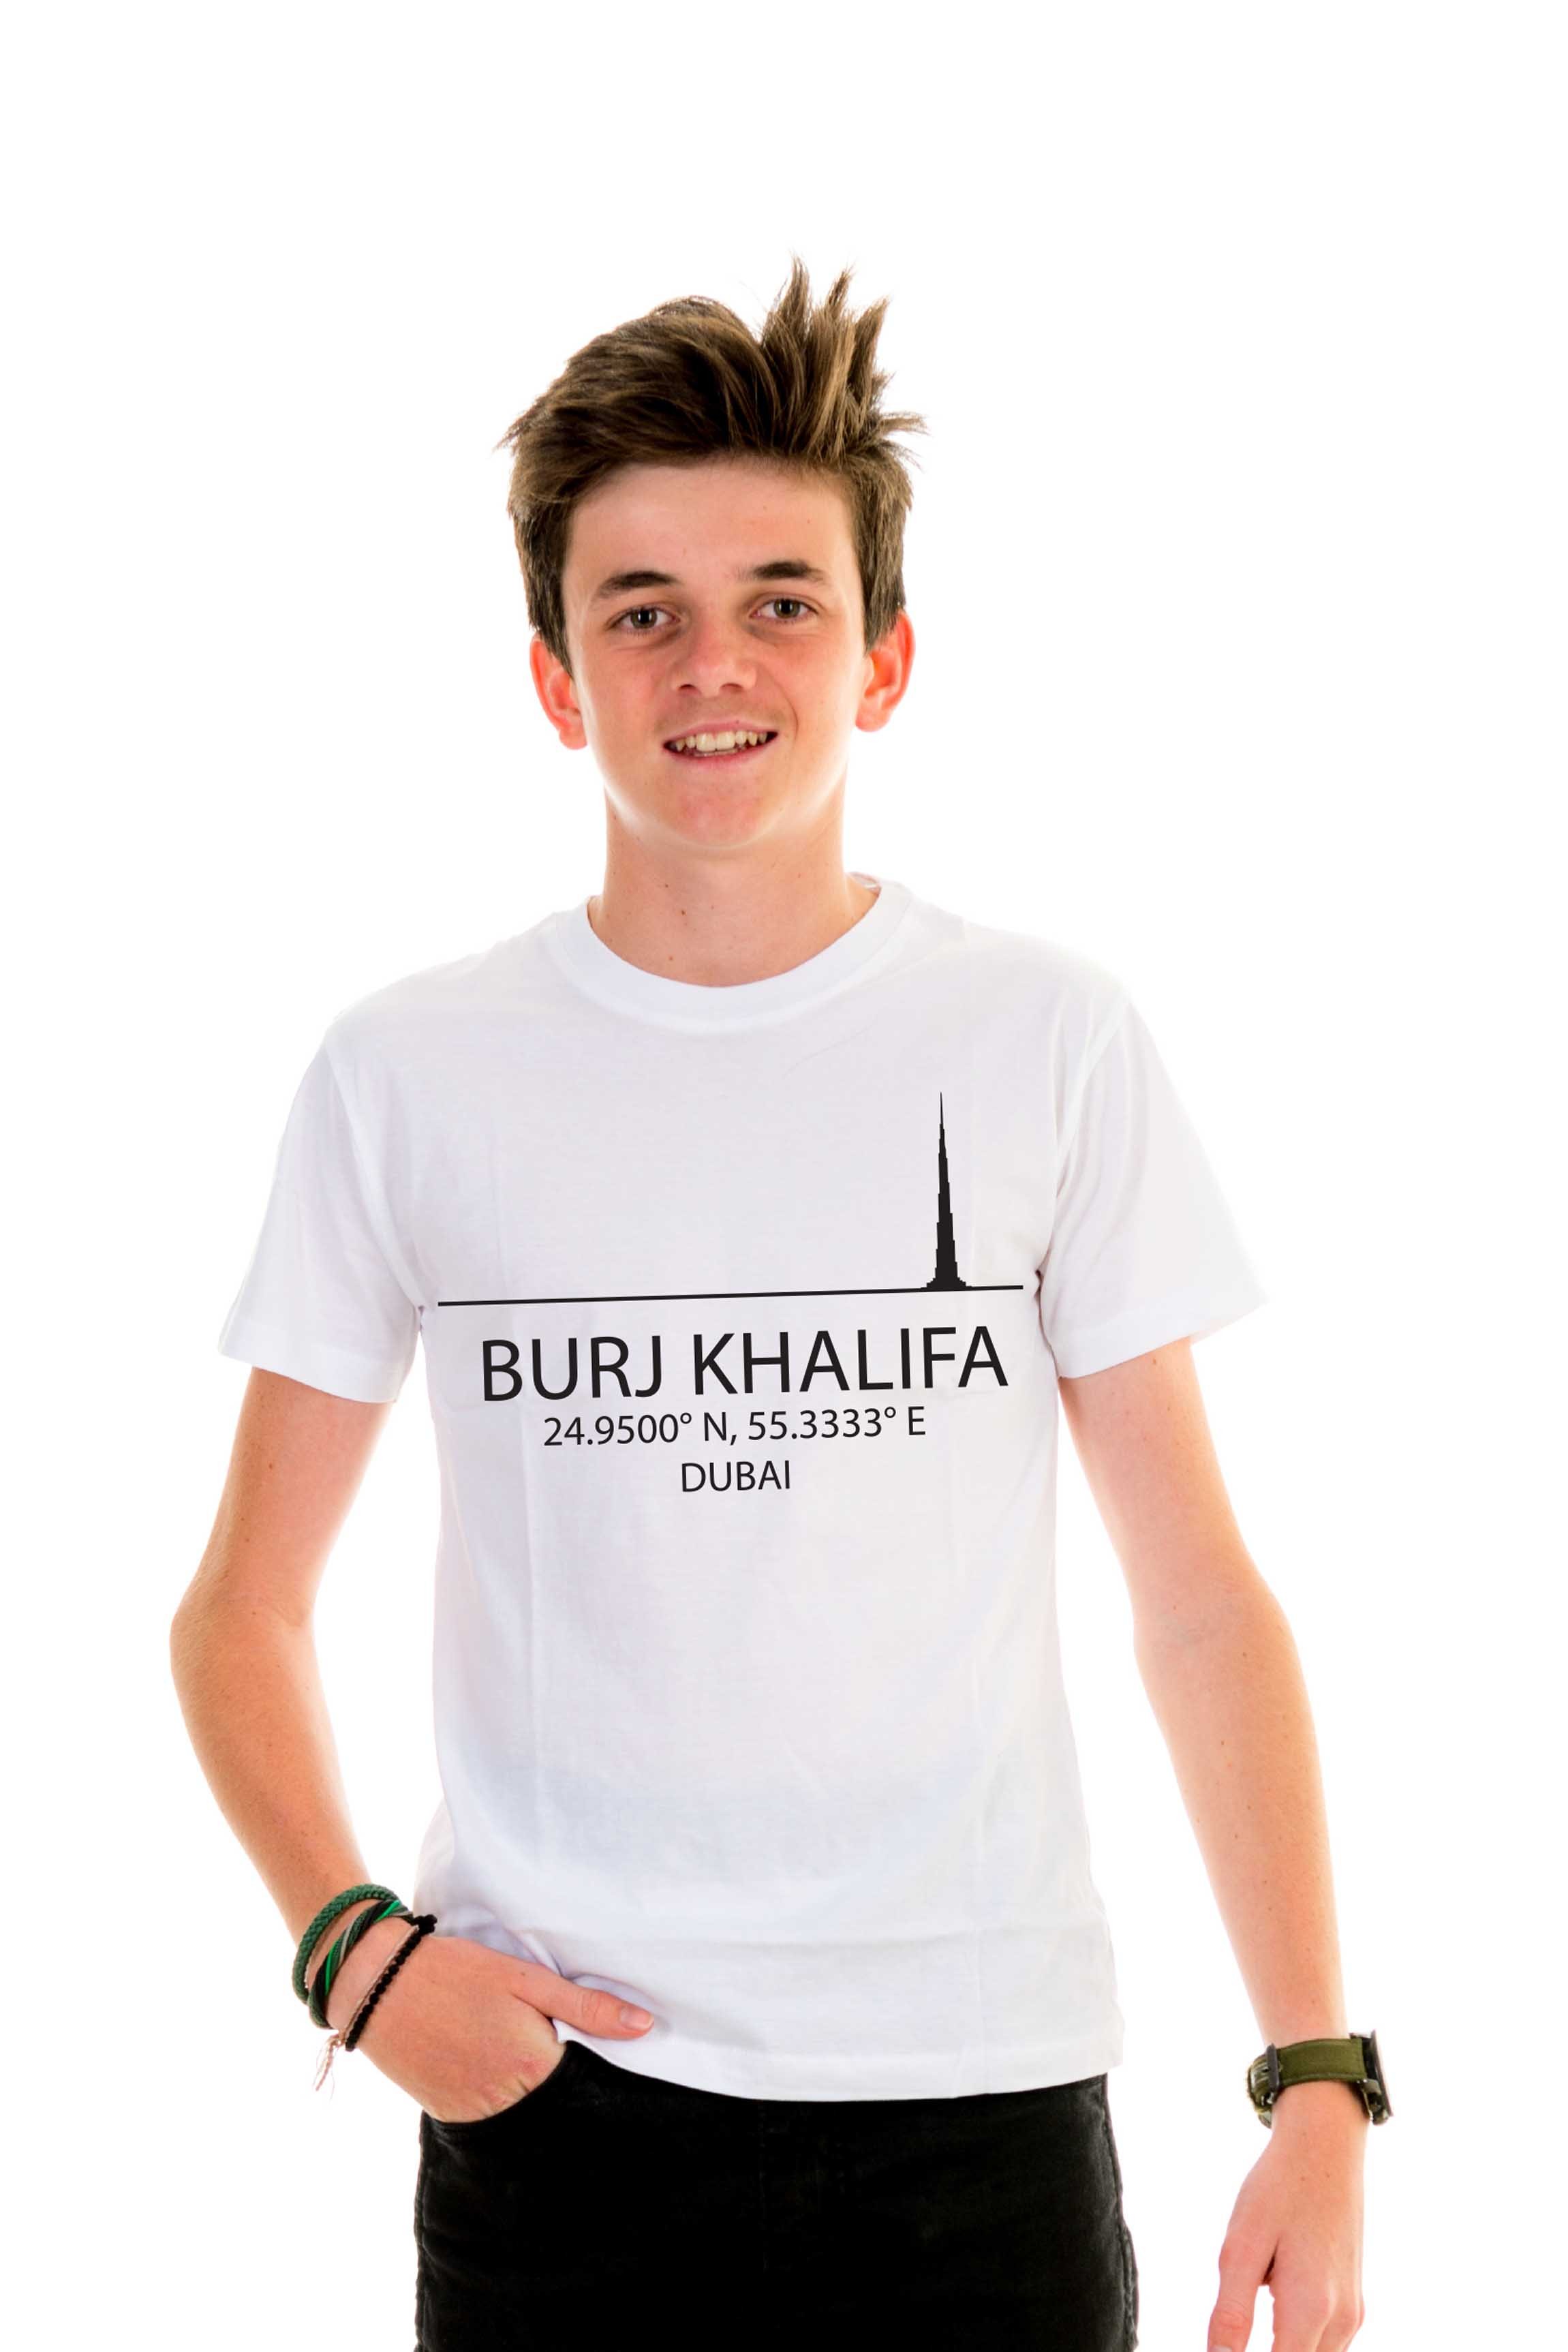 T-shirt kid Burj Khalifa - Dubai, - Around us - Popular themes - Designs